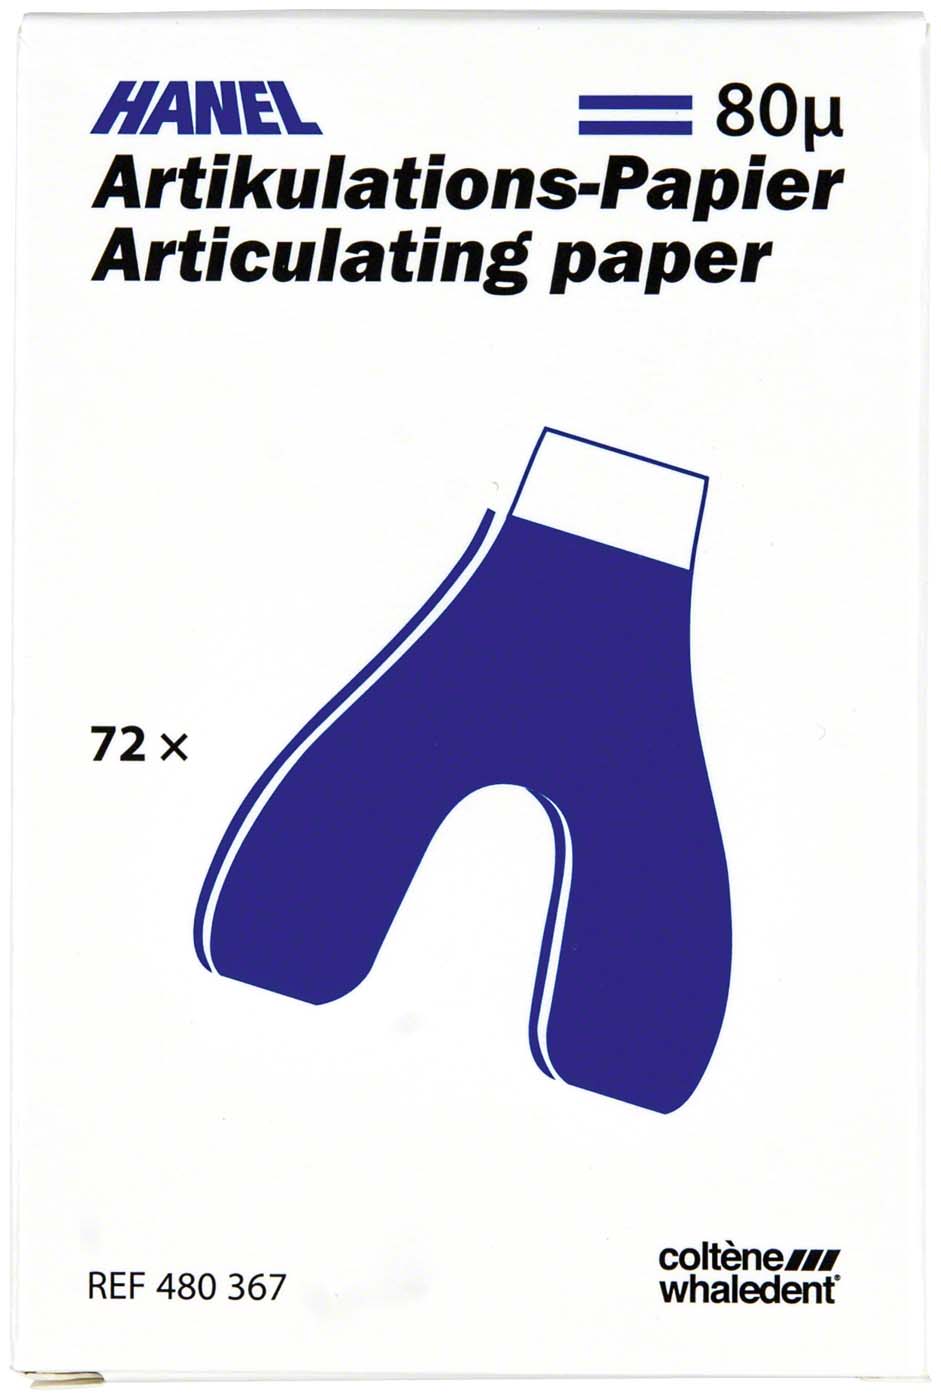 HANEL Artikulations-Papier 80 µm COLTENE